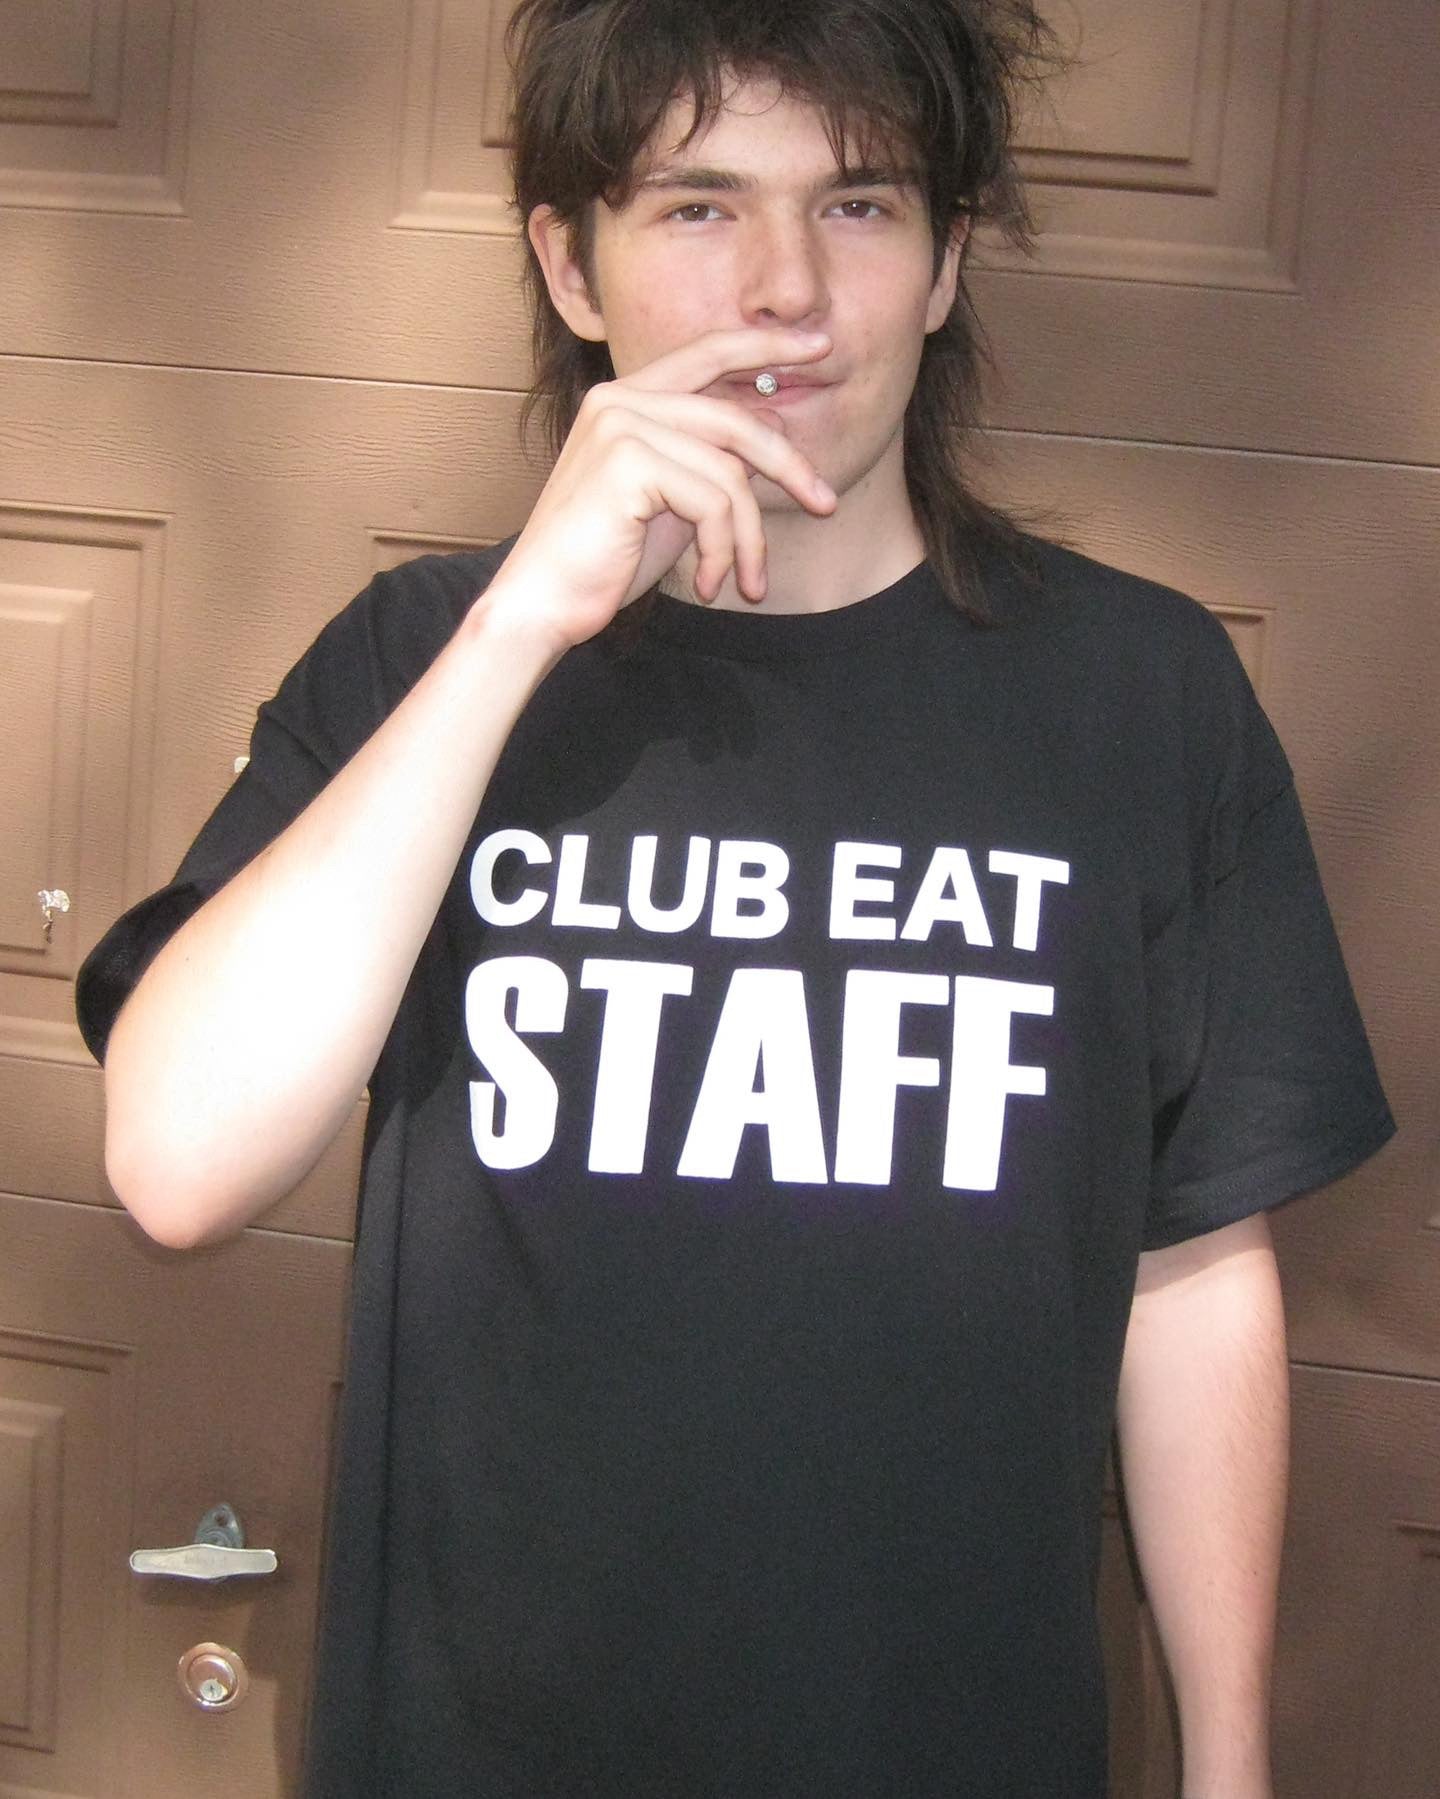 Club Eat Staff XL Tee